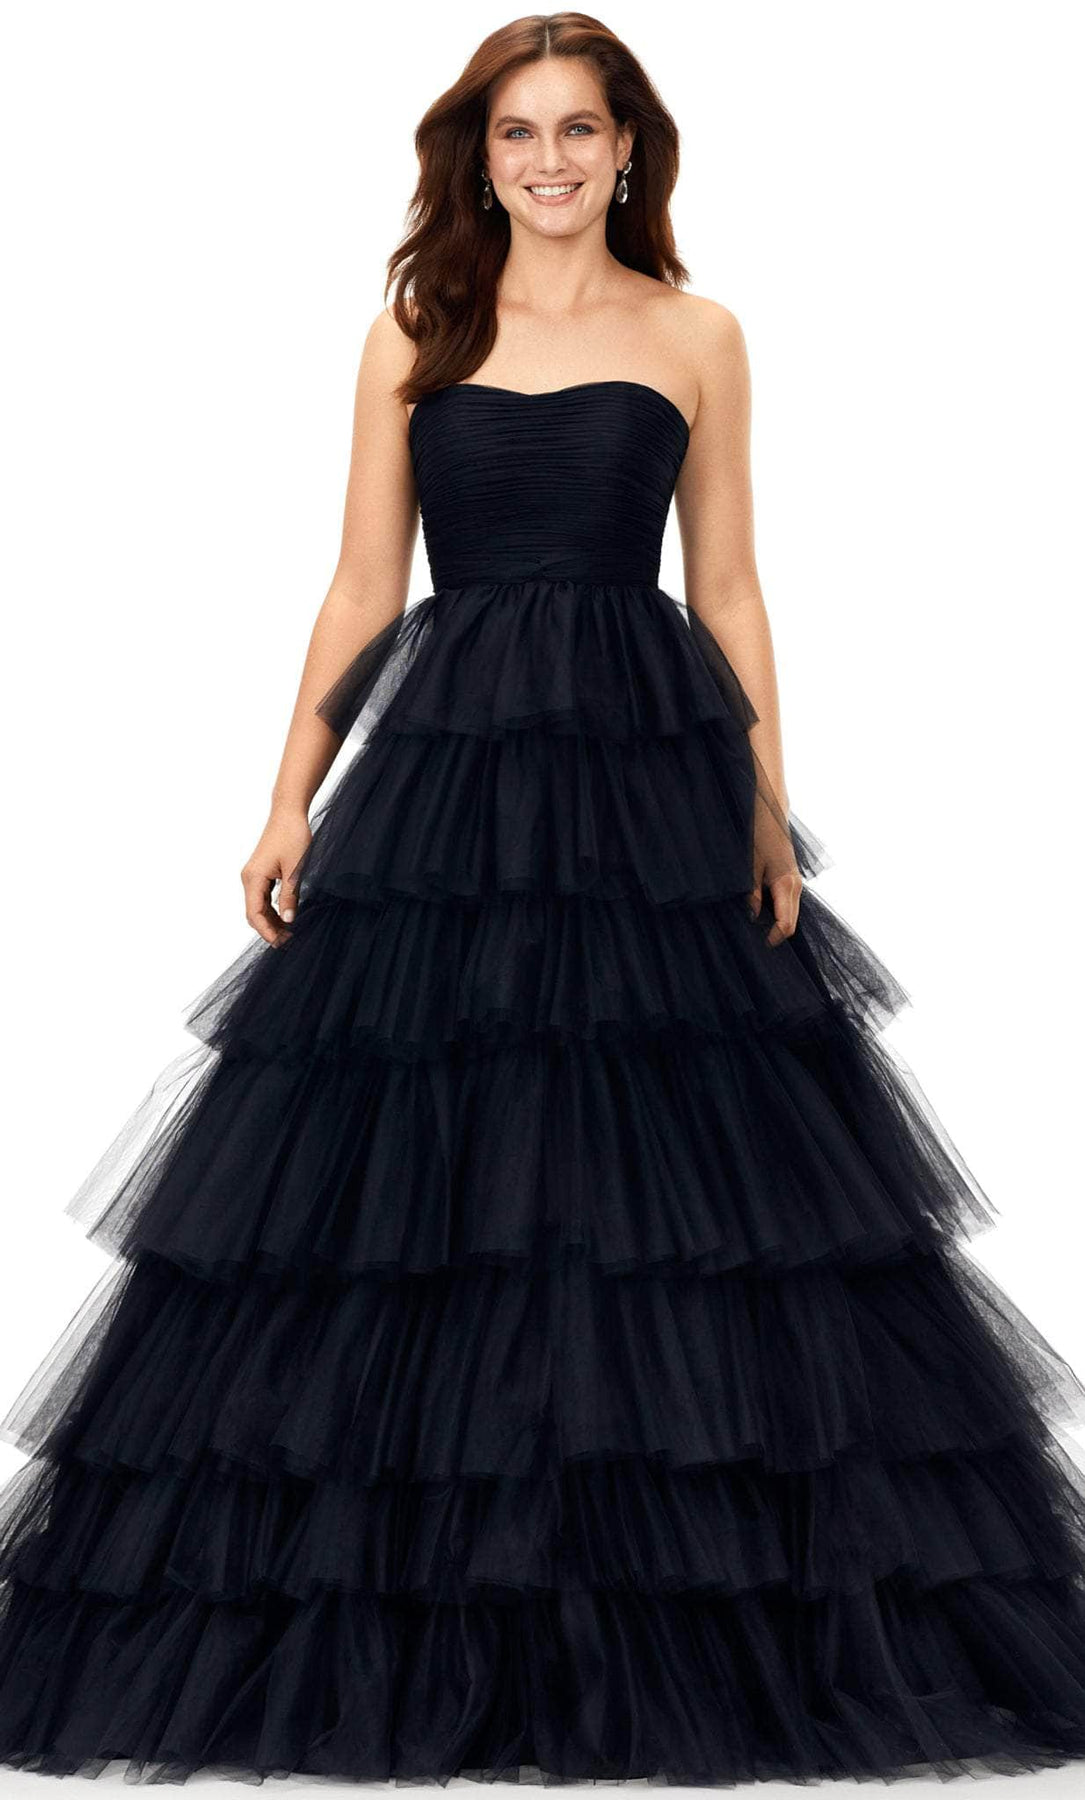 Ashley Lauren 11343 - Strapless Ruched Bodice Ballgown Special Occasion Dress 00 / Black